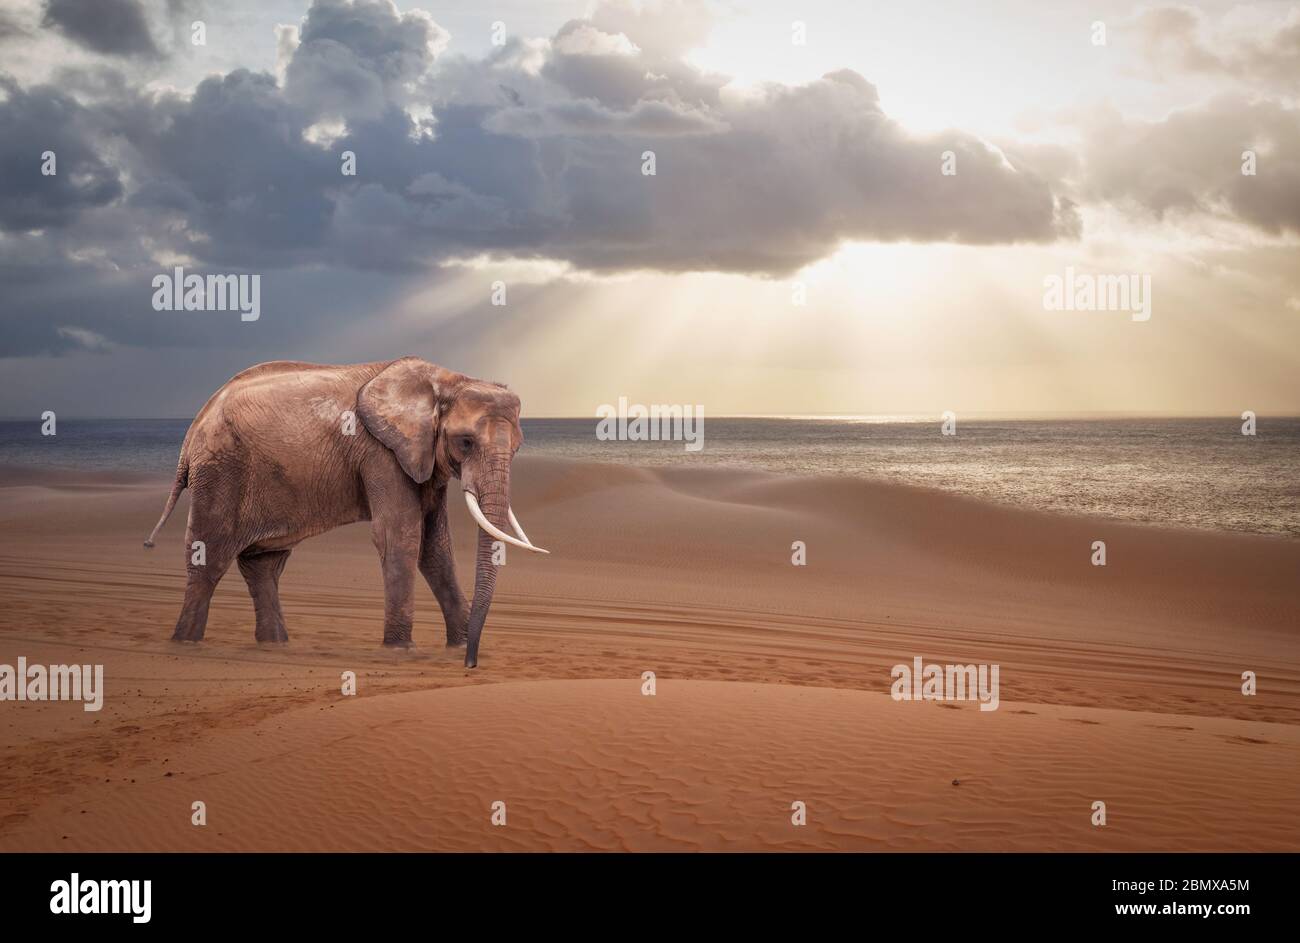 African elephant in the desert. Stock Photo